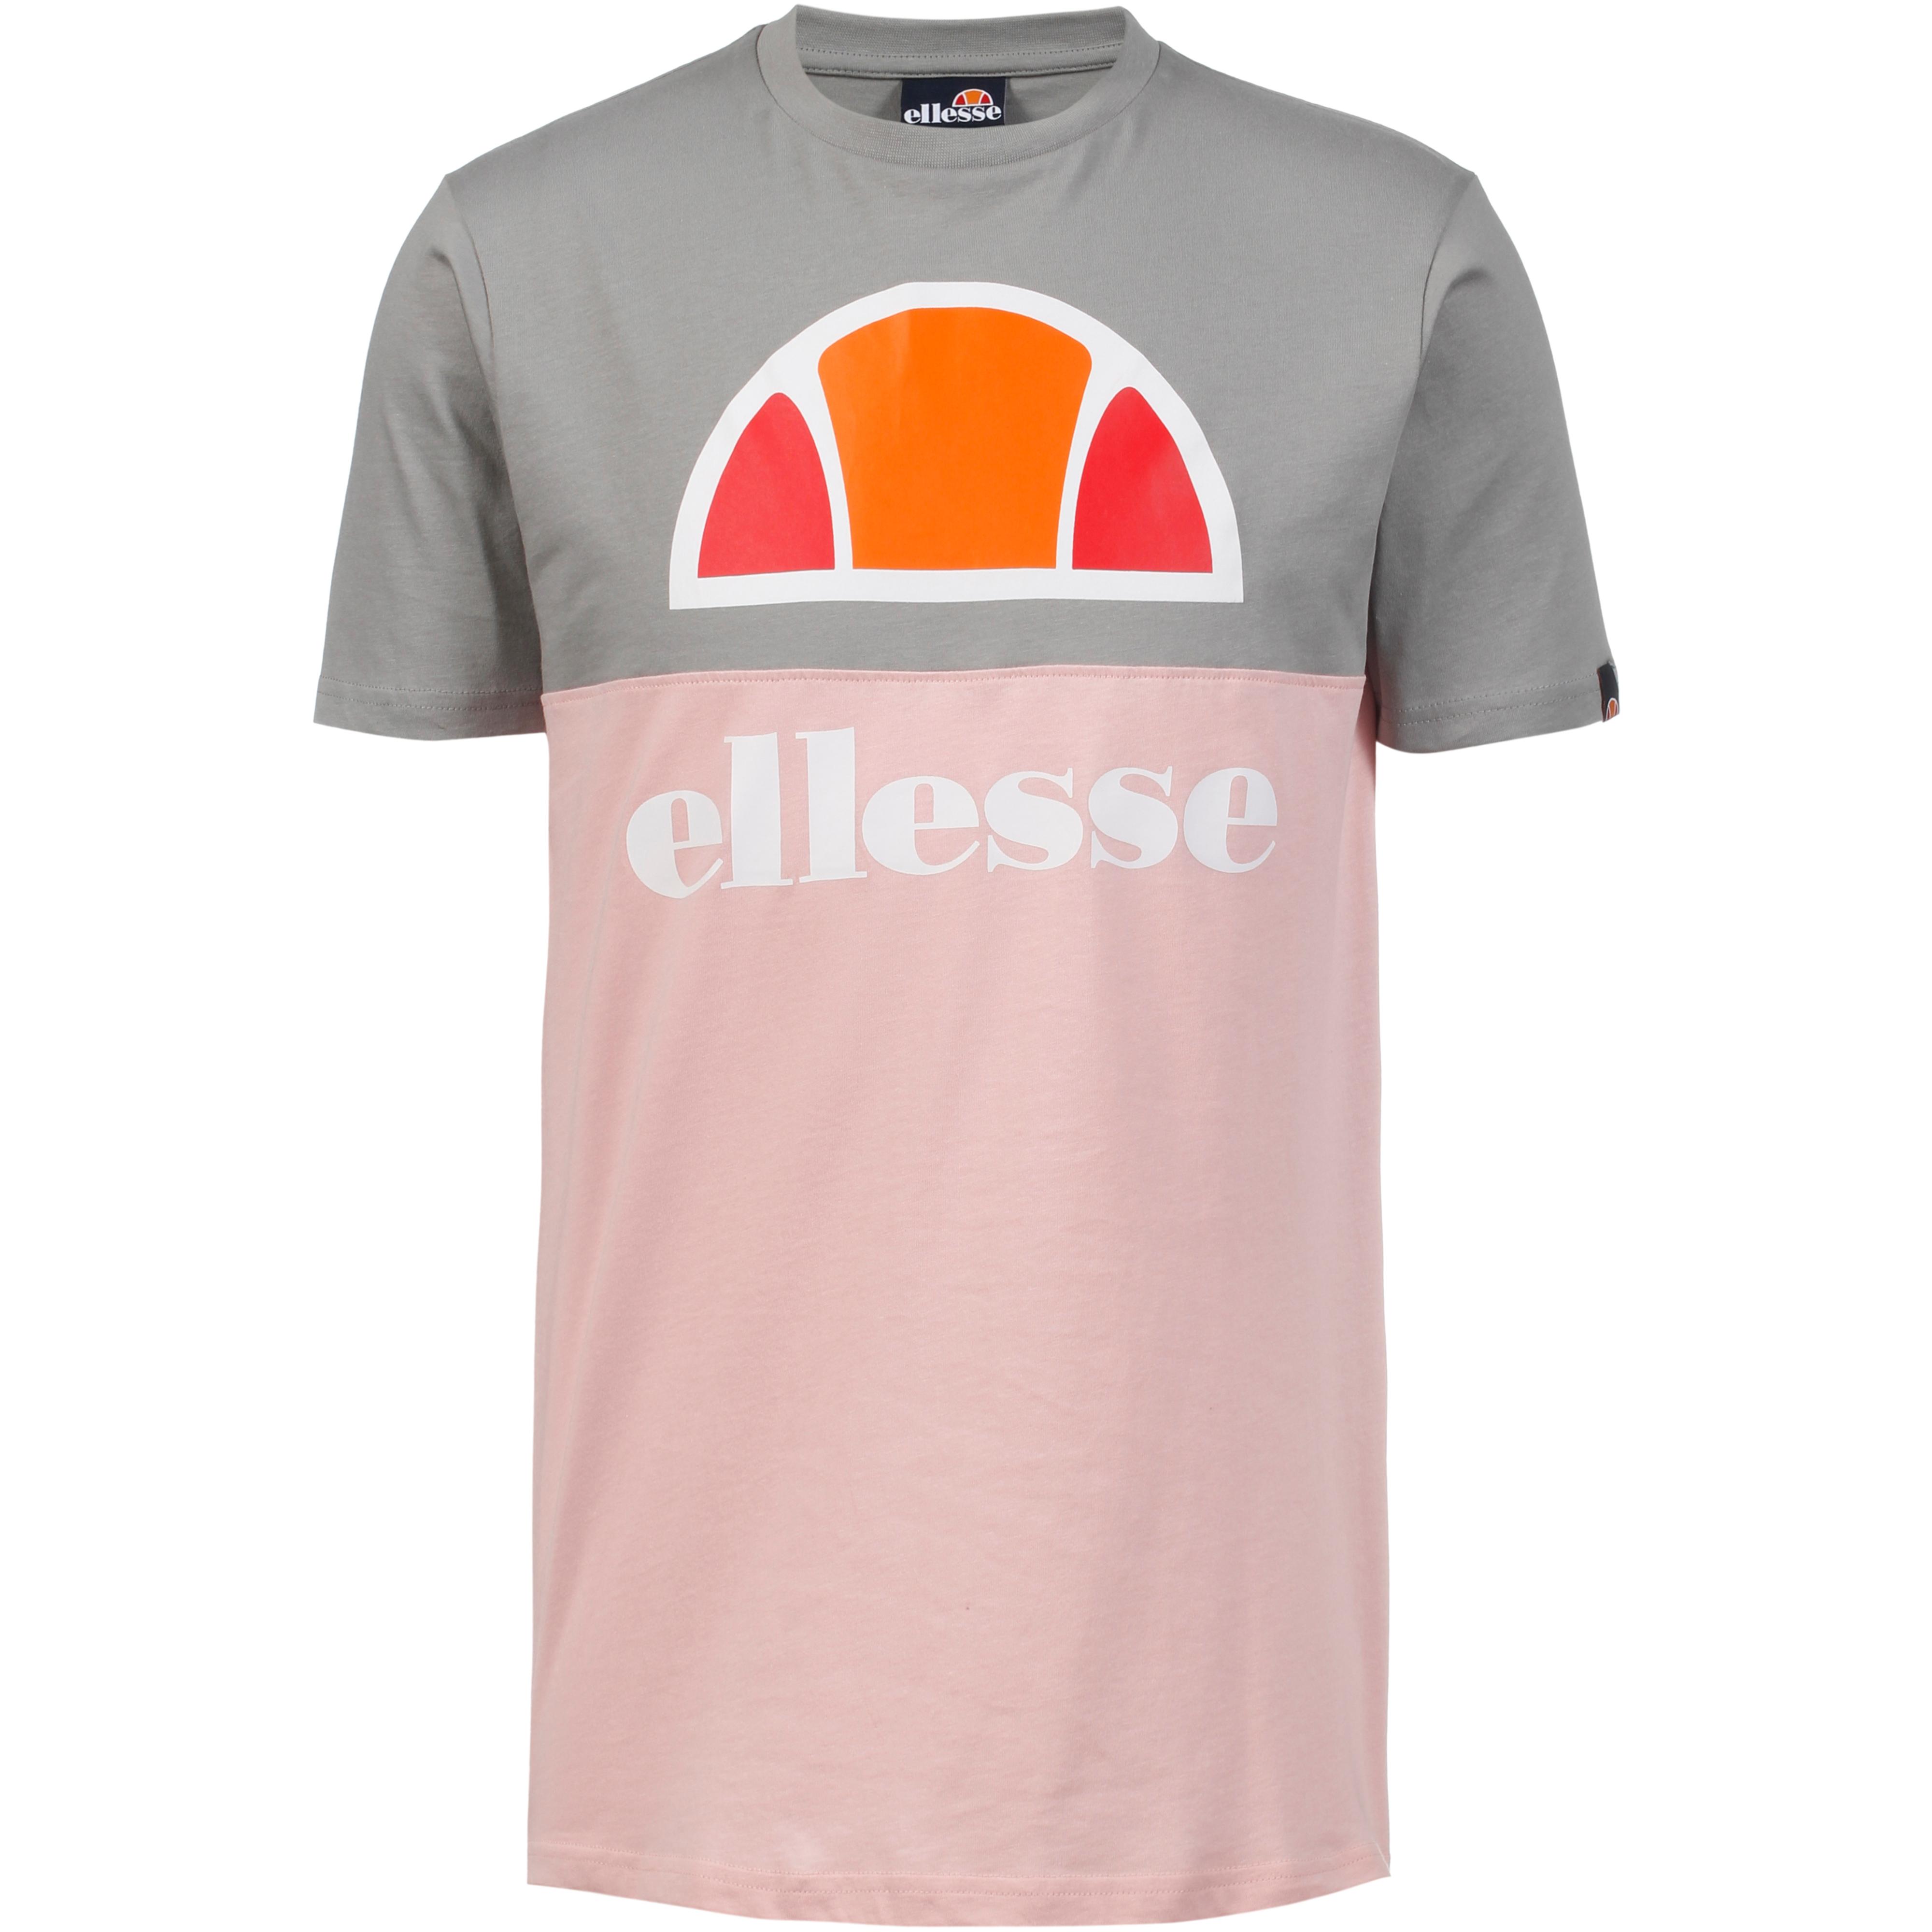 Image of Ellesse Arbatax T-Shirt Herren